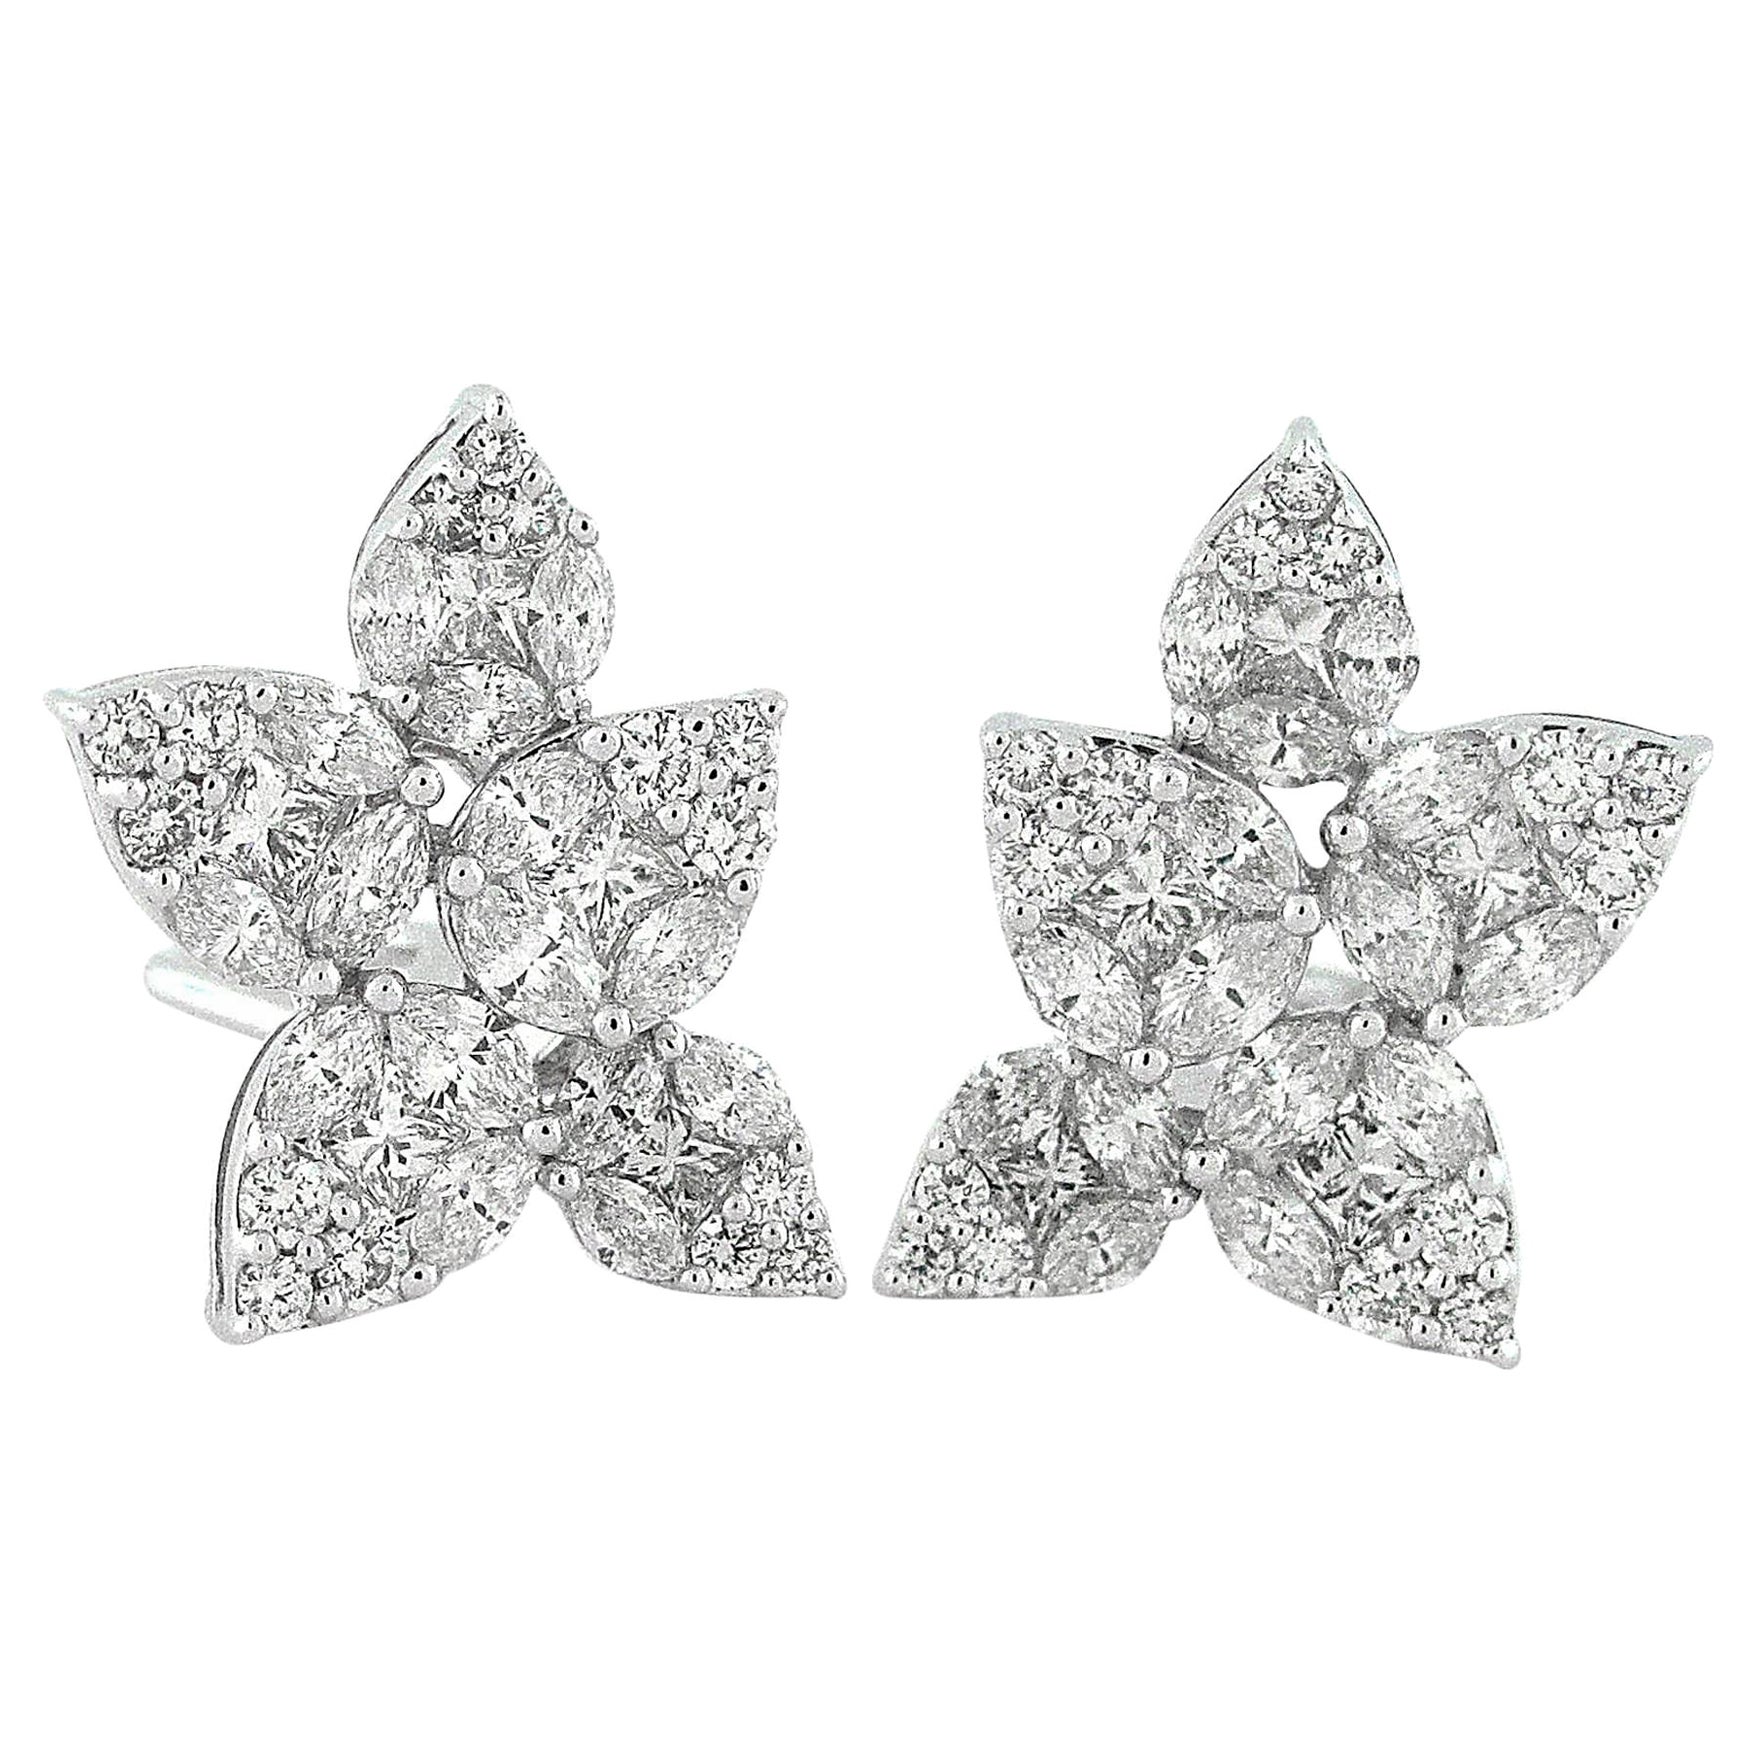 4 Carat Diamond Cluster Stud Earrings